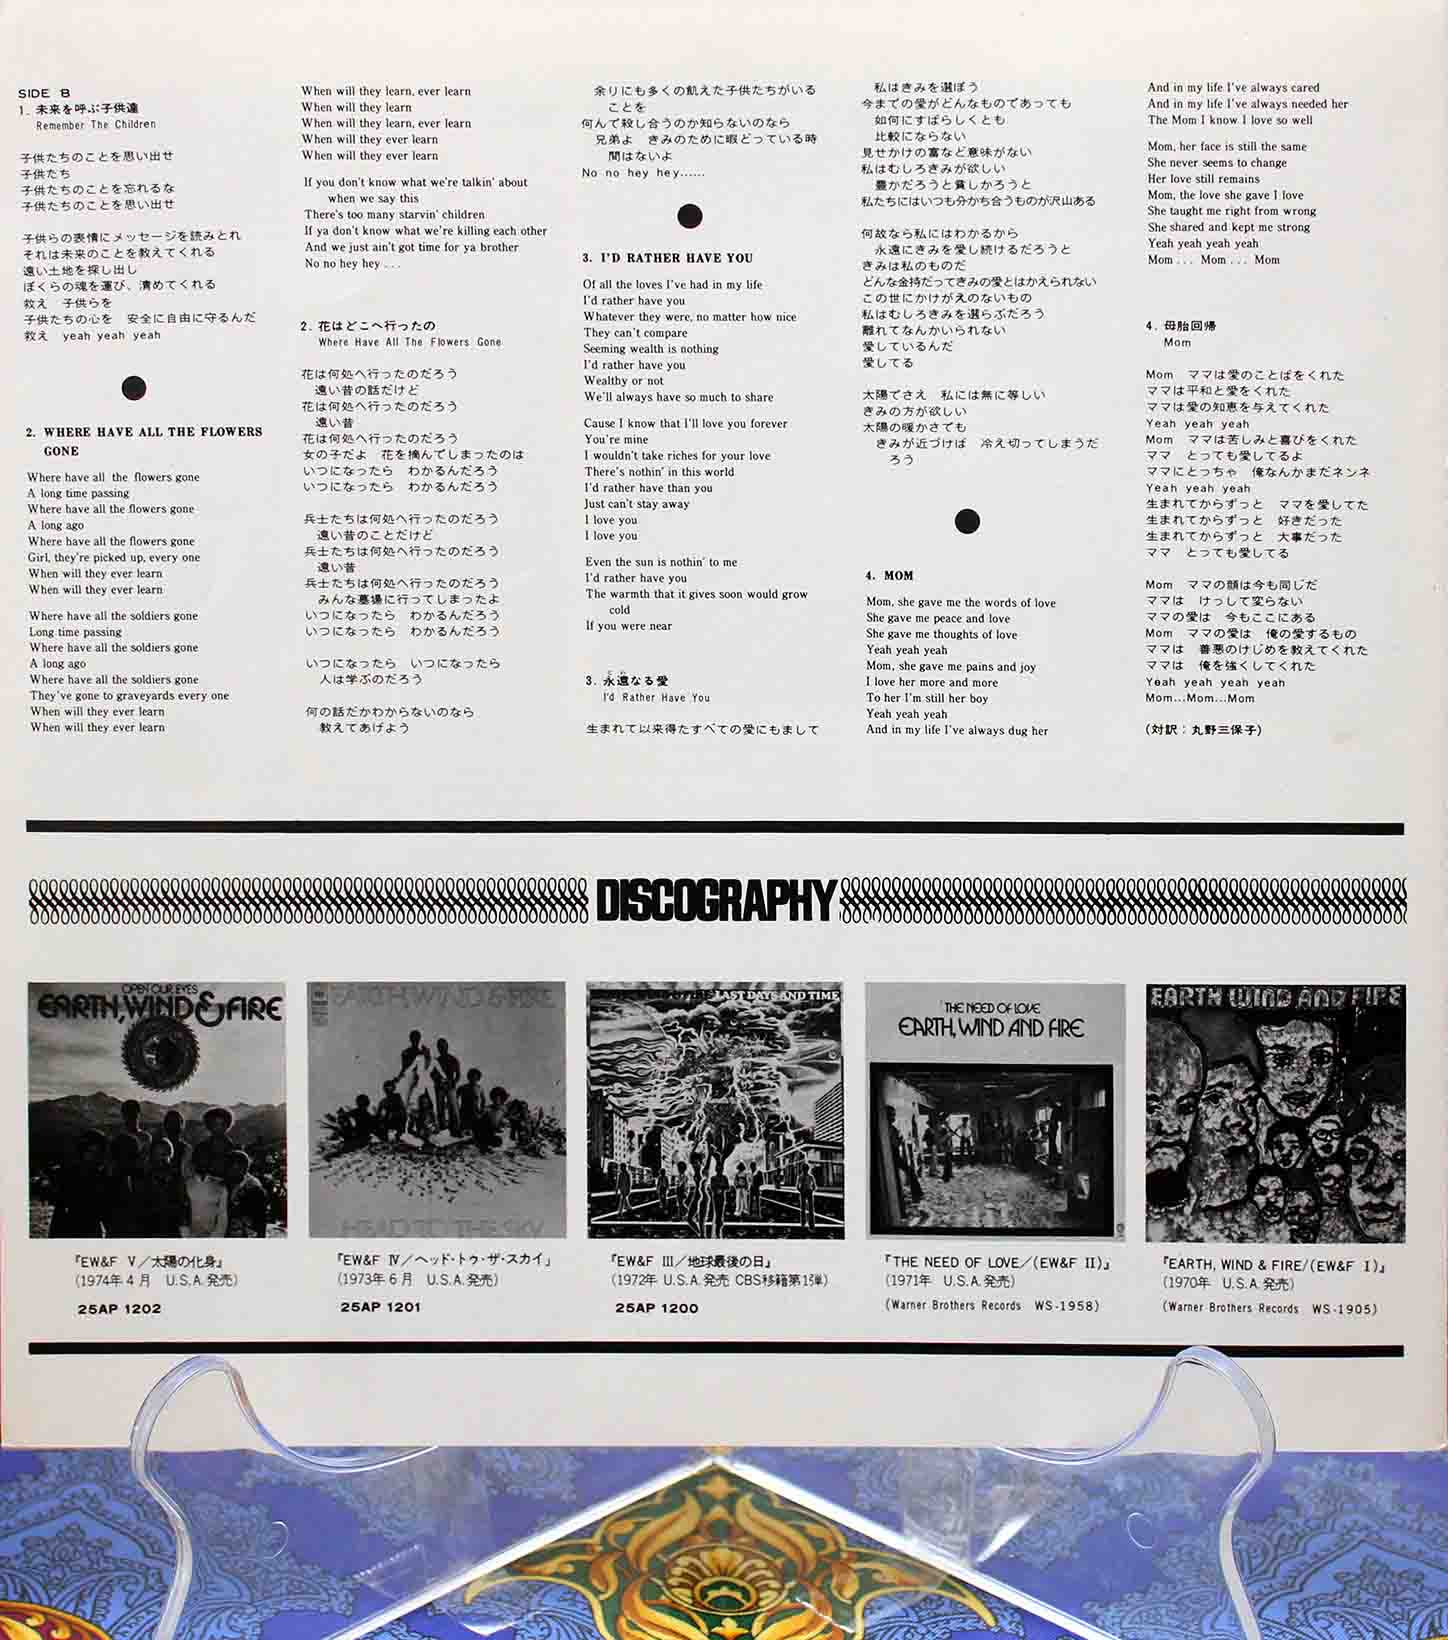 Earth, Wind  Fire / Last Days And Time （邦題：地球最後の日）1972 - Disco DJ AKI ブログ